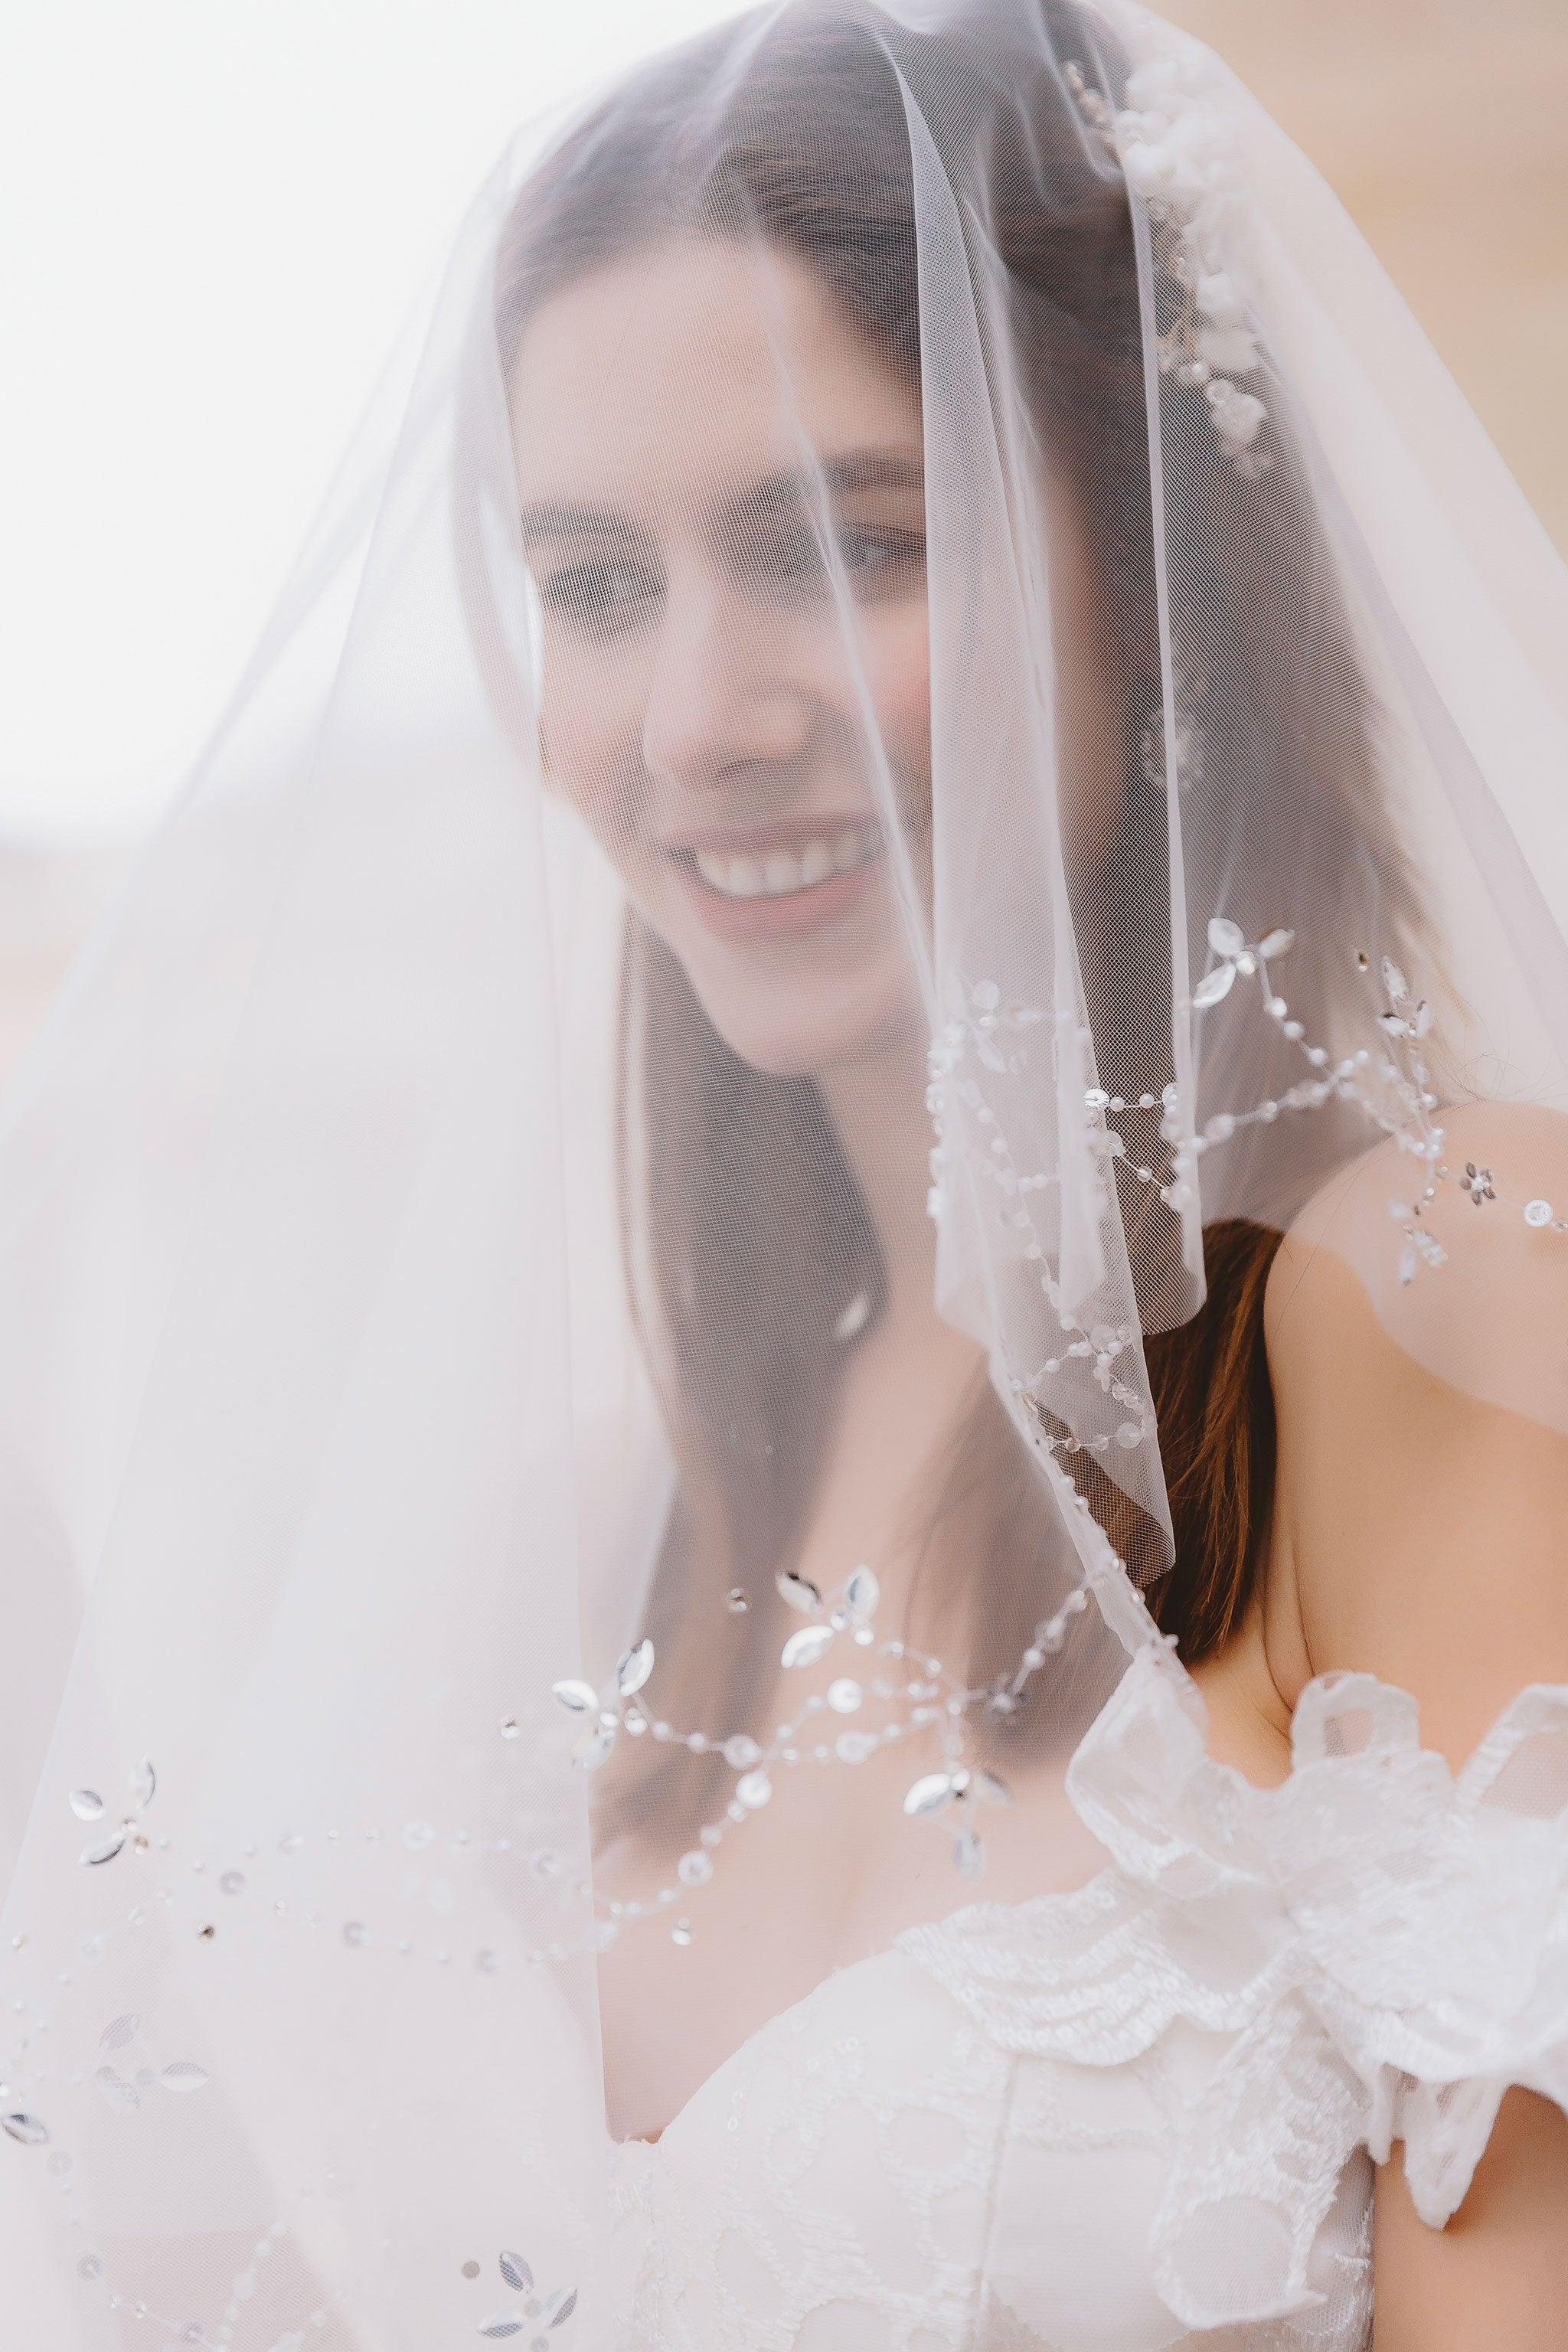 Viniodress Elbow Length Wedding Veils Bridal Accessories AC1009